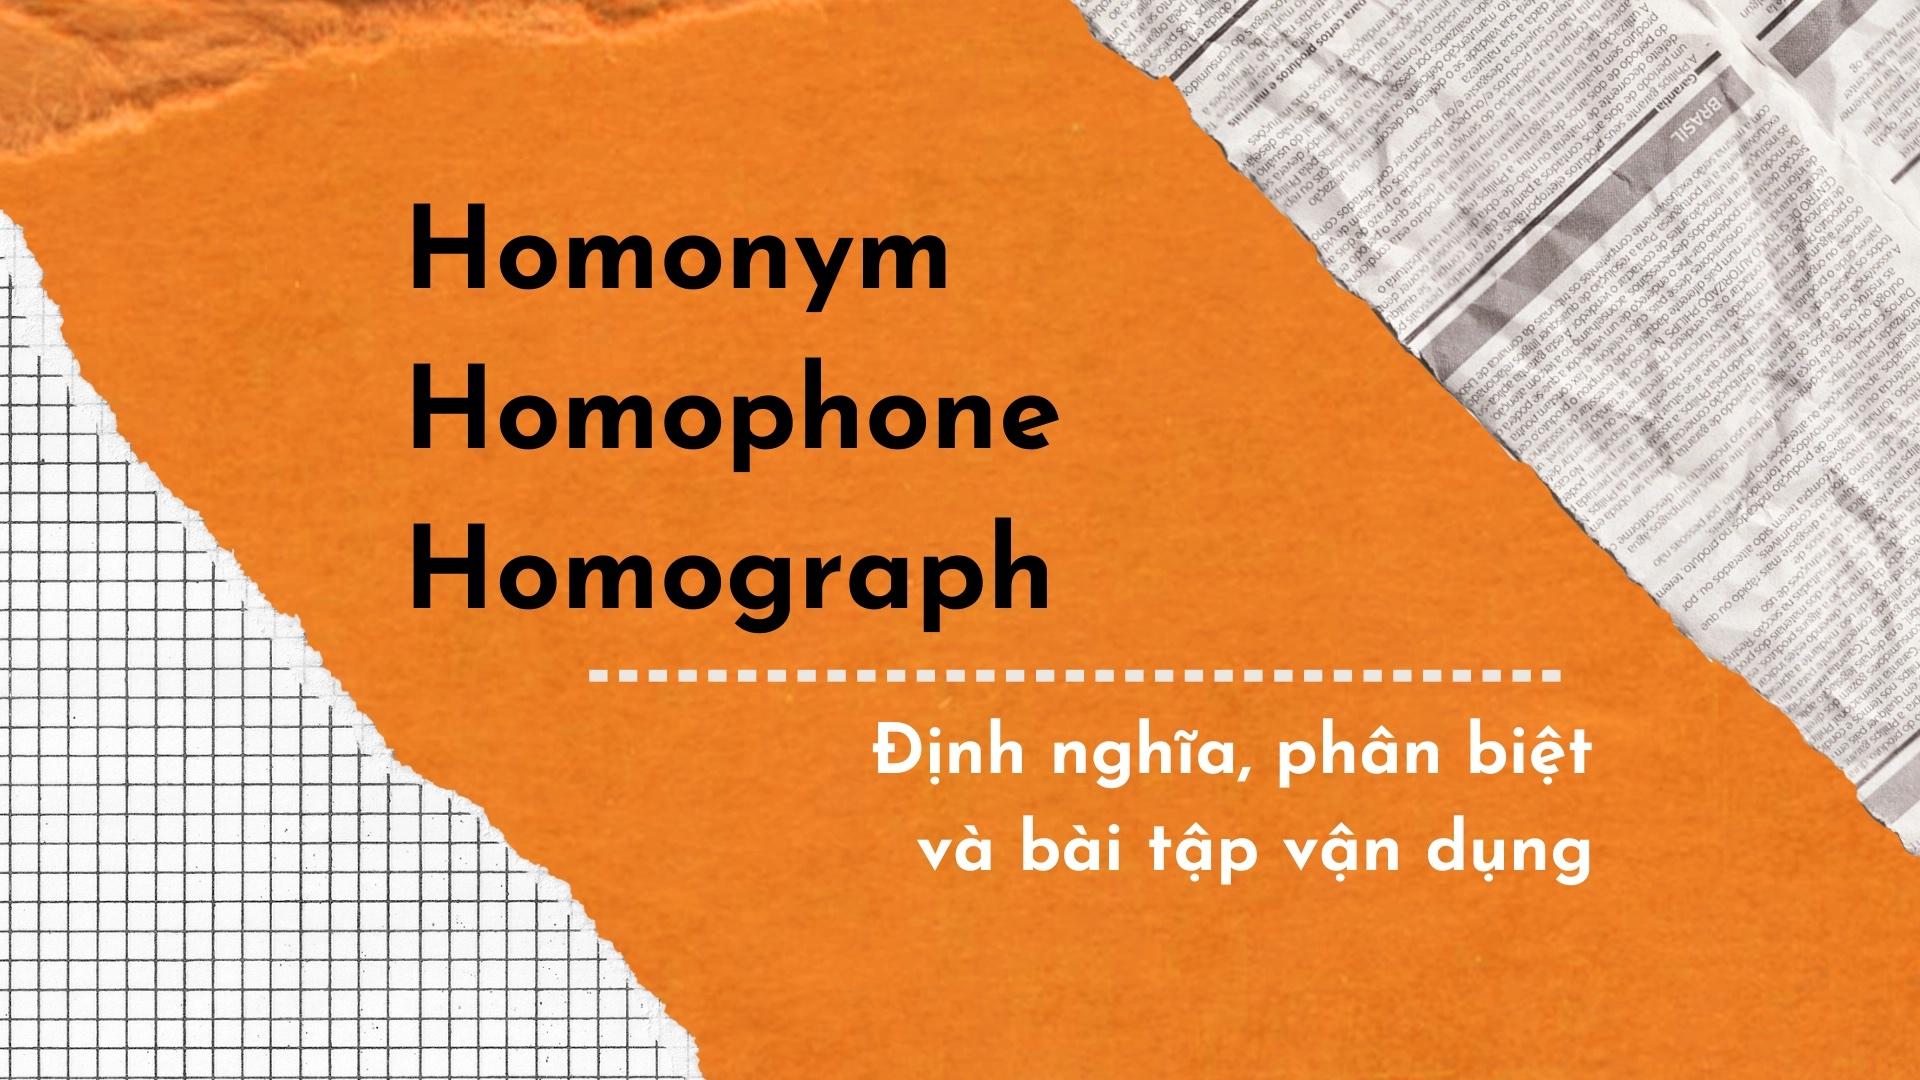 homonym-homophone-homograph-dinh-nghia-phan-biet-va-bai-tap-van-dung